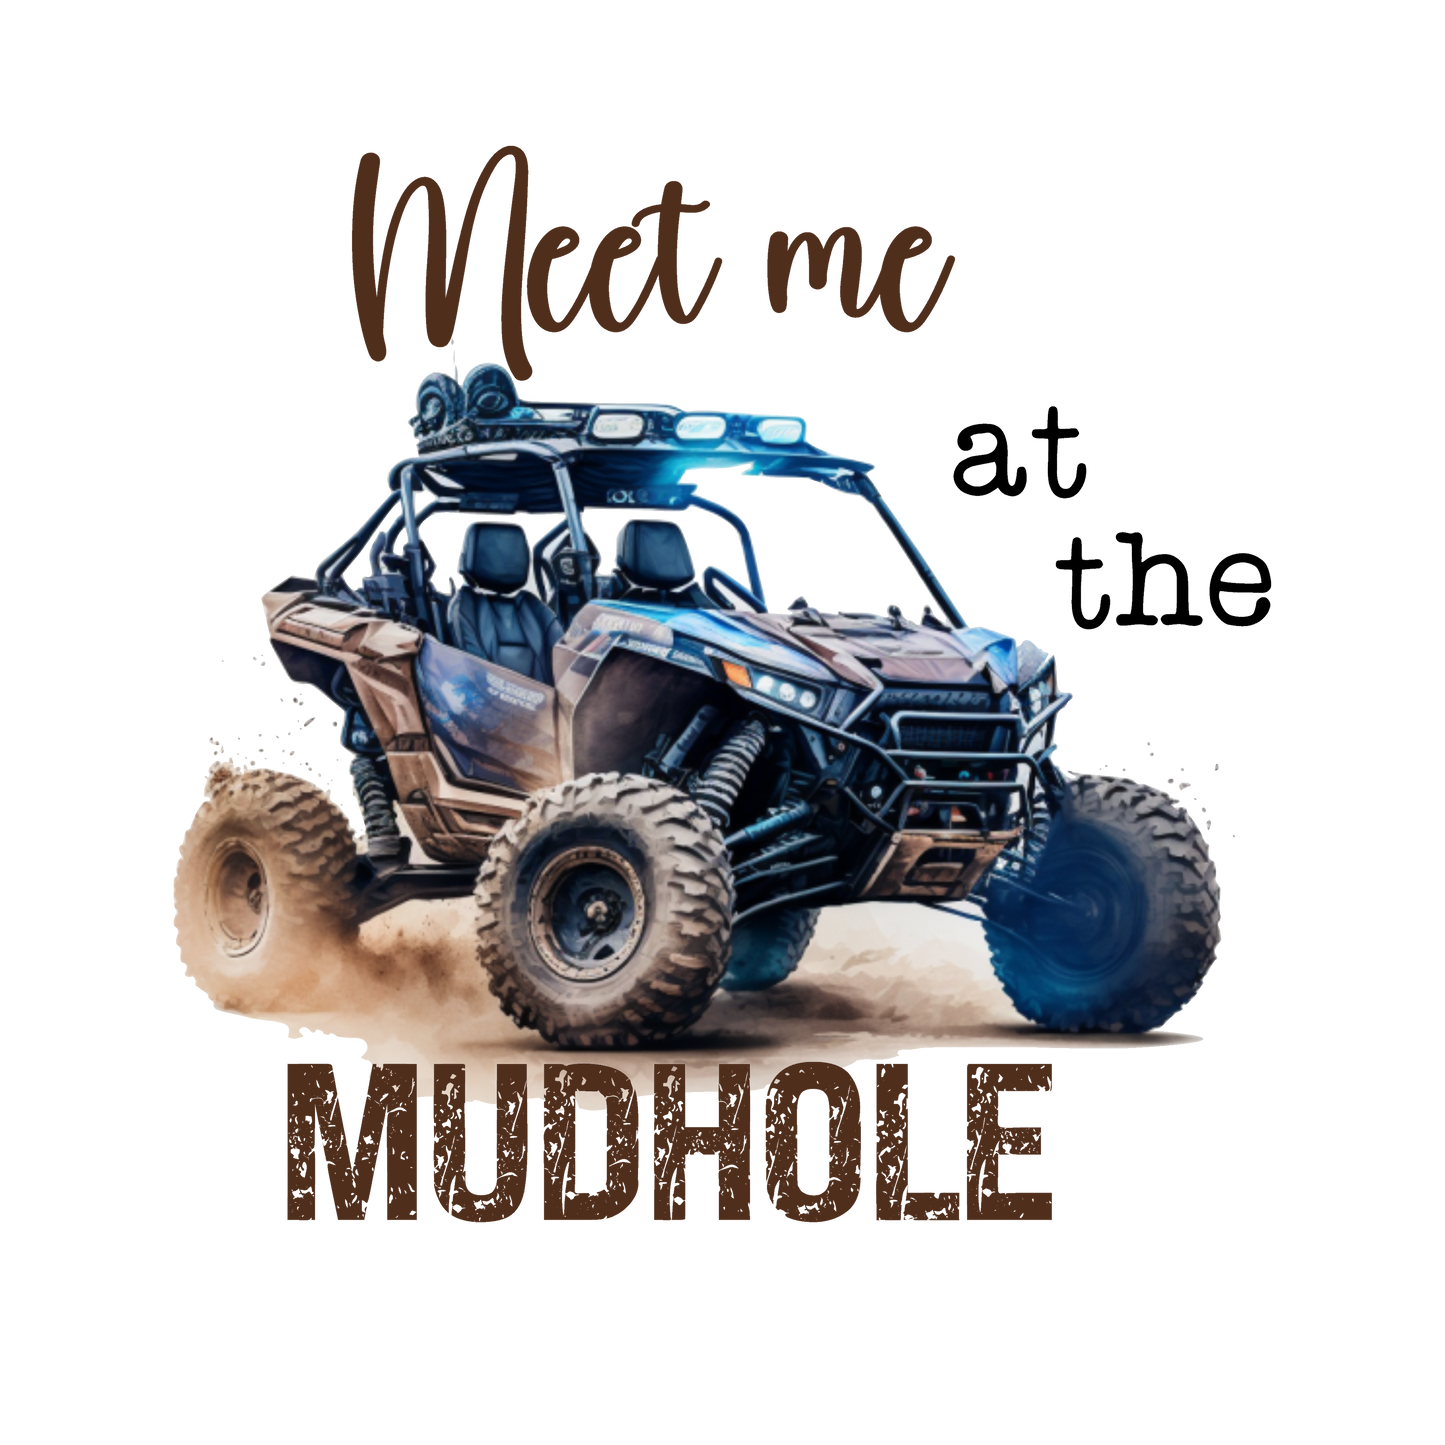 Meet me at the mudhole